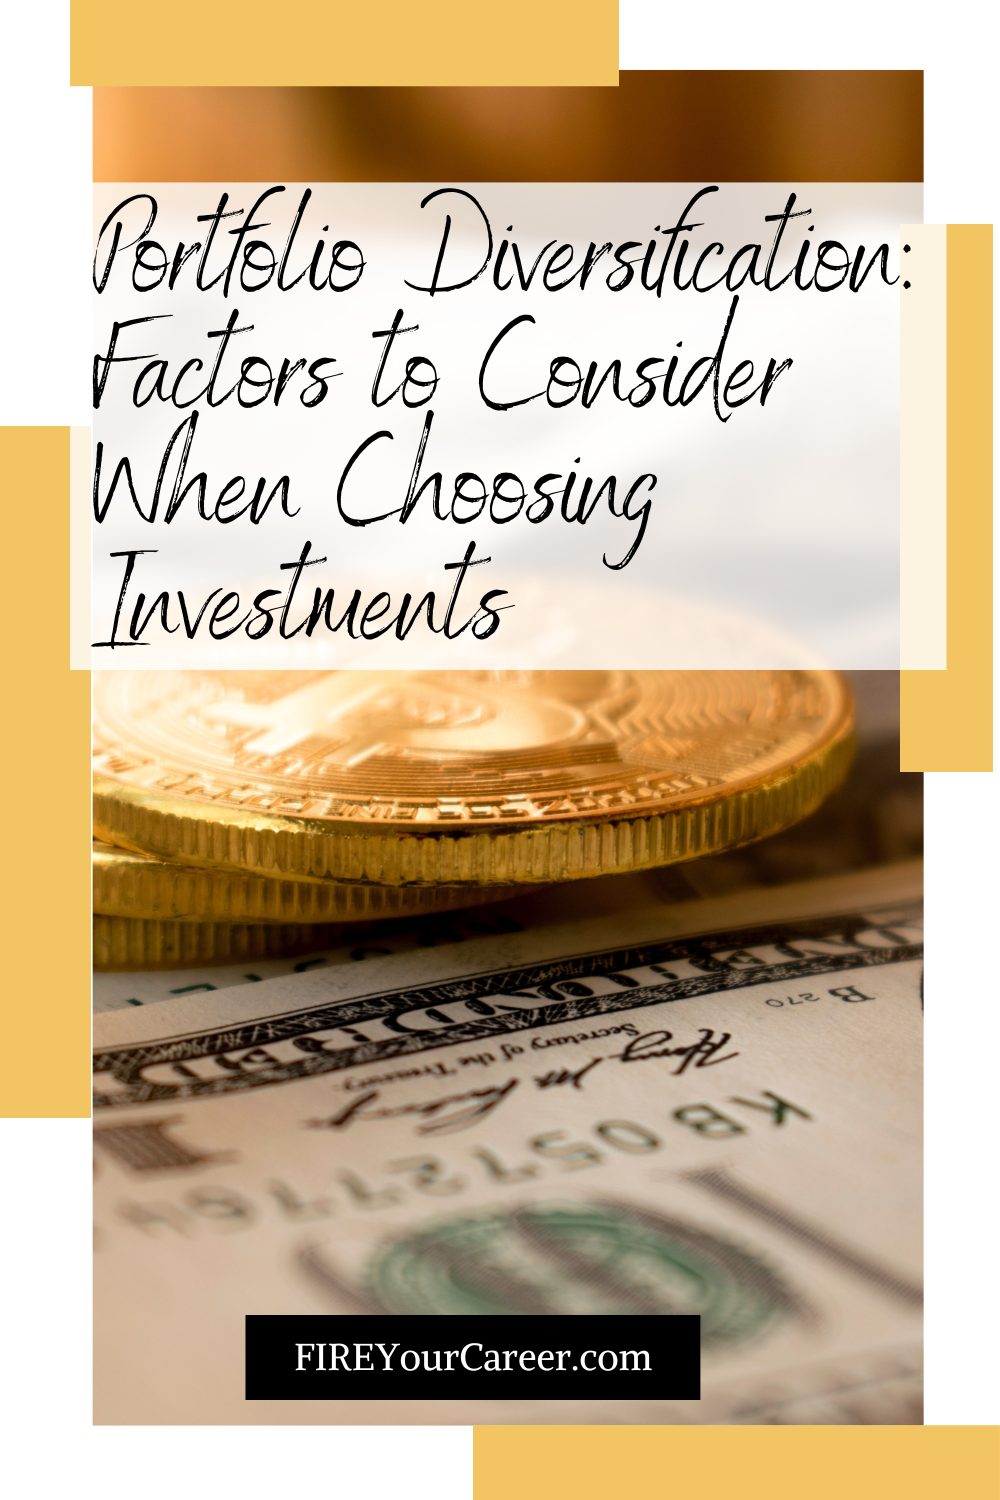 Portfolio Diversification Factors to Consider When Choosing Investments Pinterest